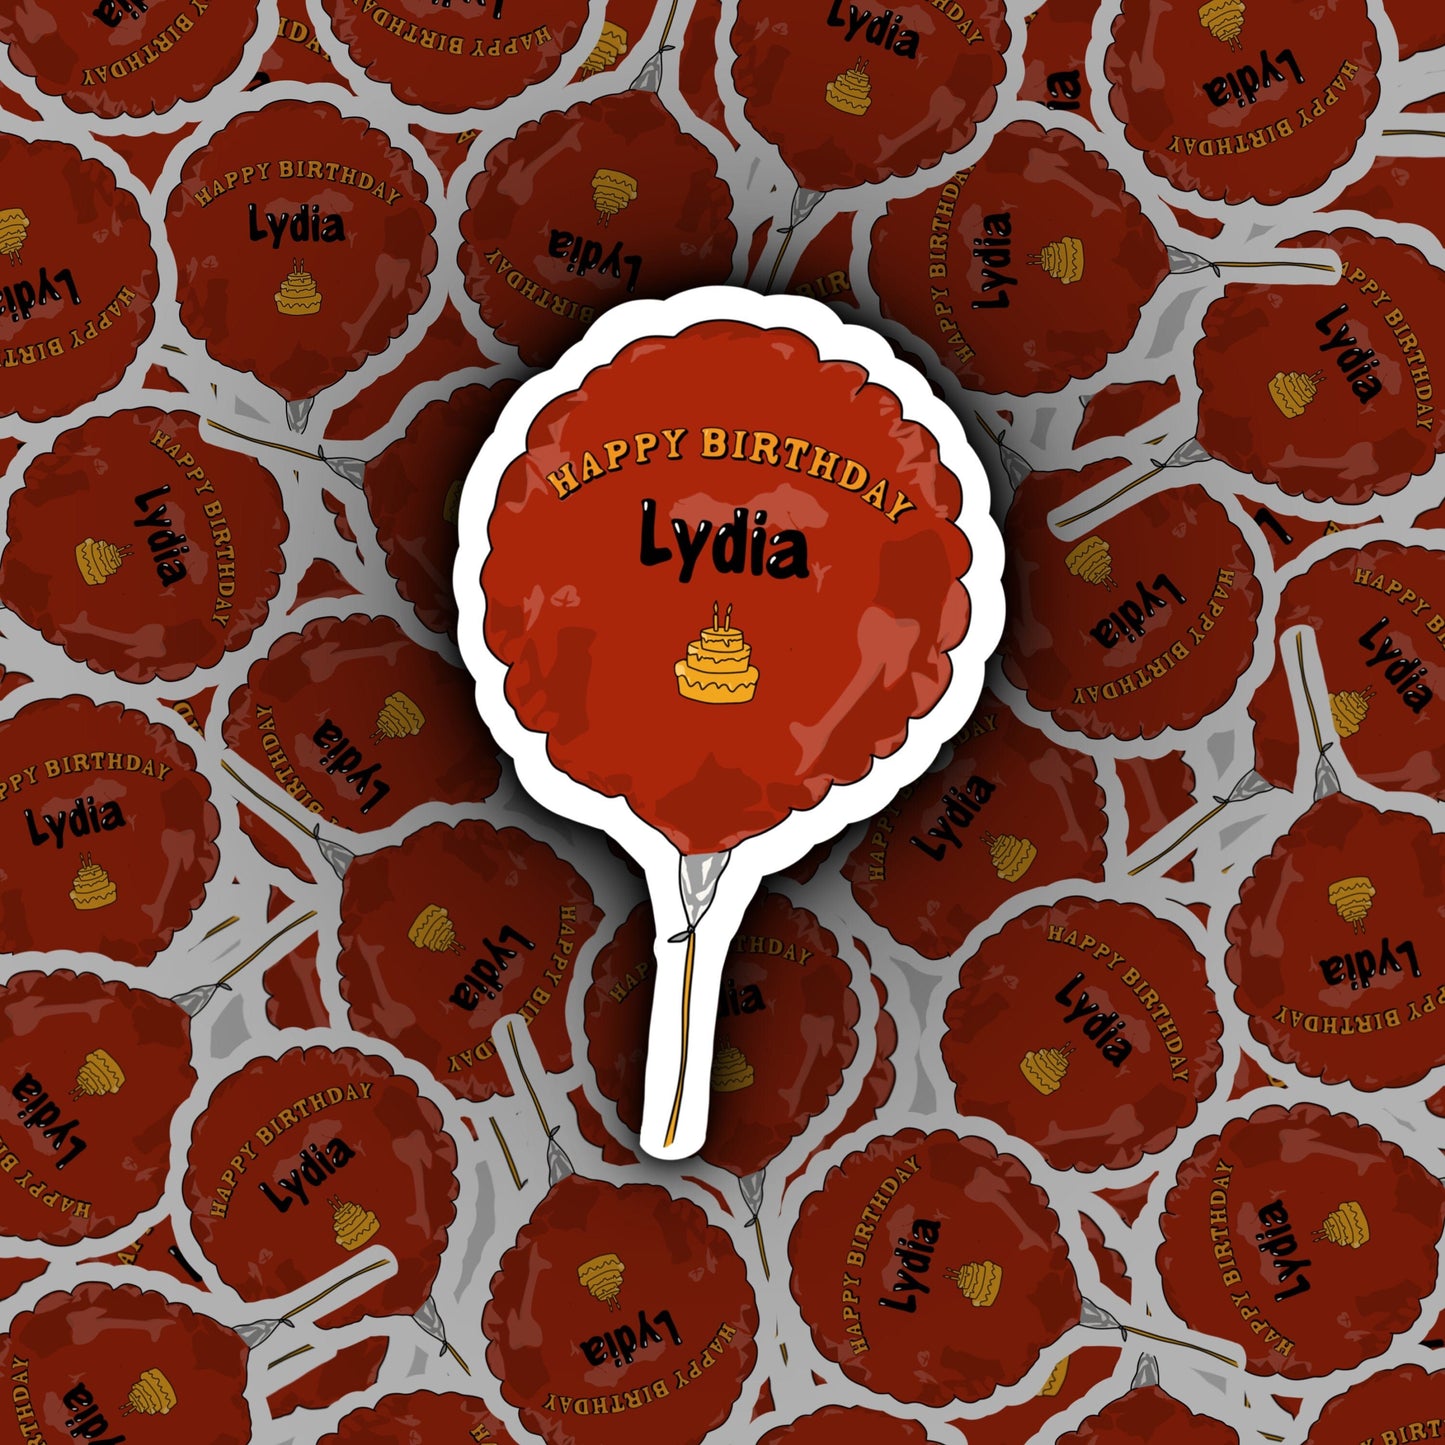 Wilson's Birthday | Lydia Balloon | Jim | Friday Night Dinner Stickers